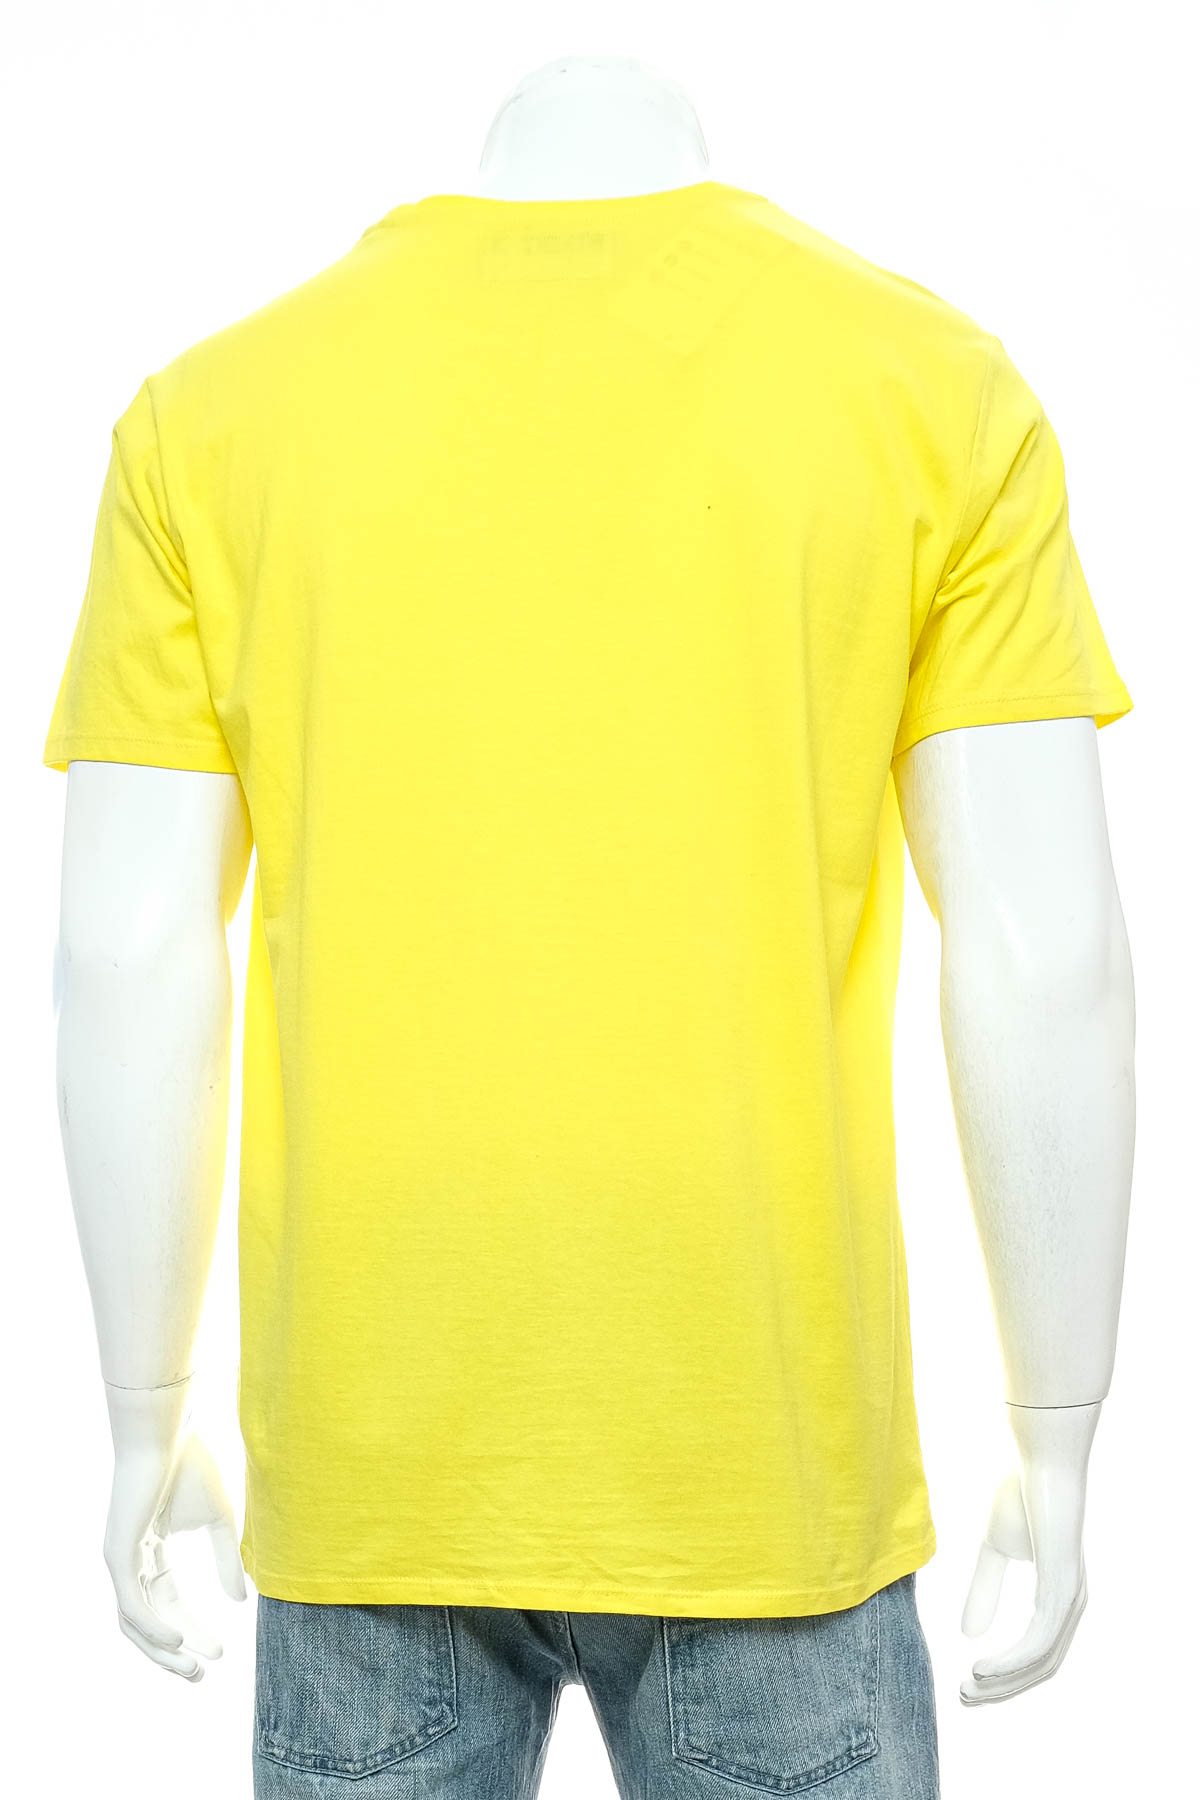 Men's T-shirt - J.J. Dyone - 1